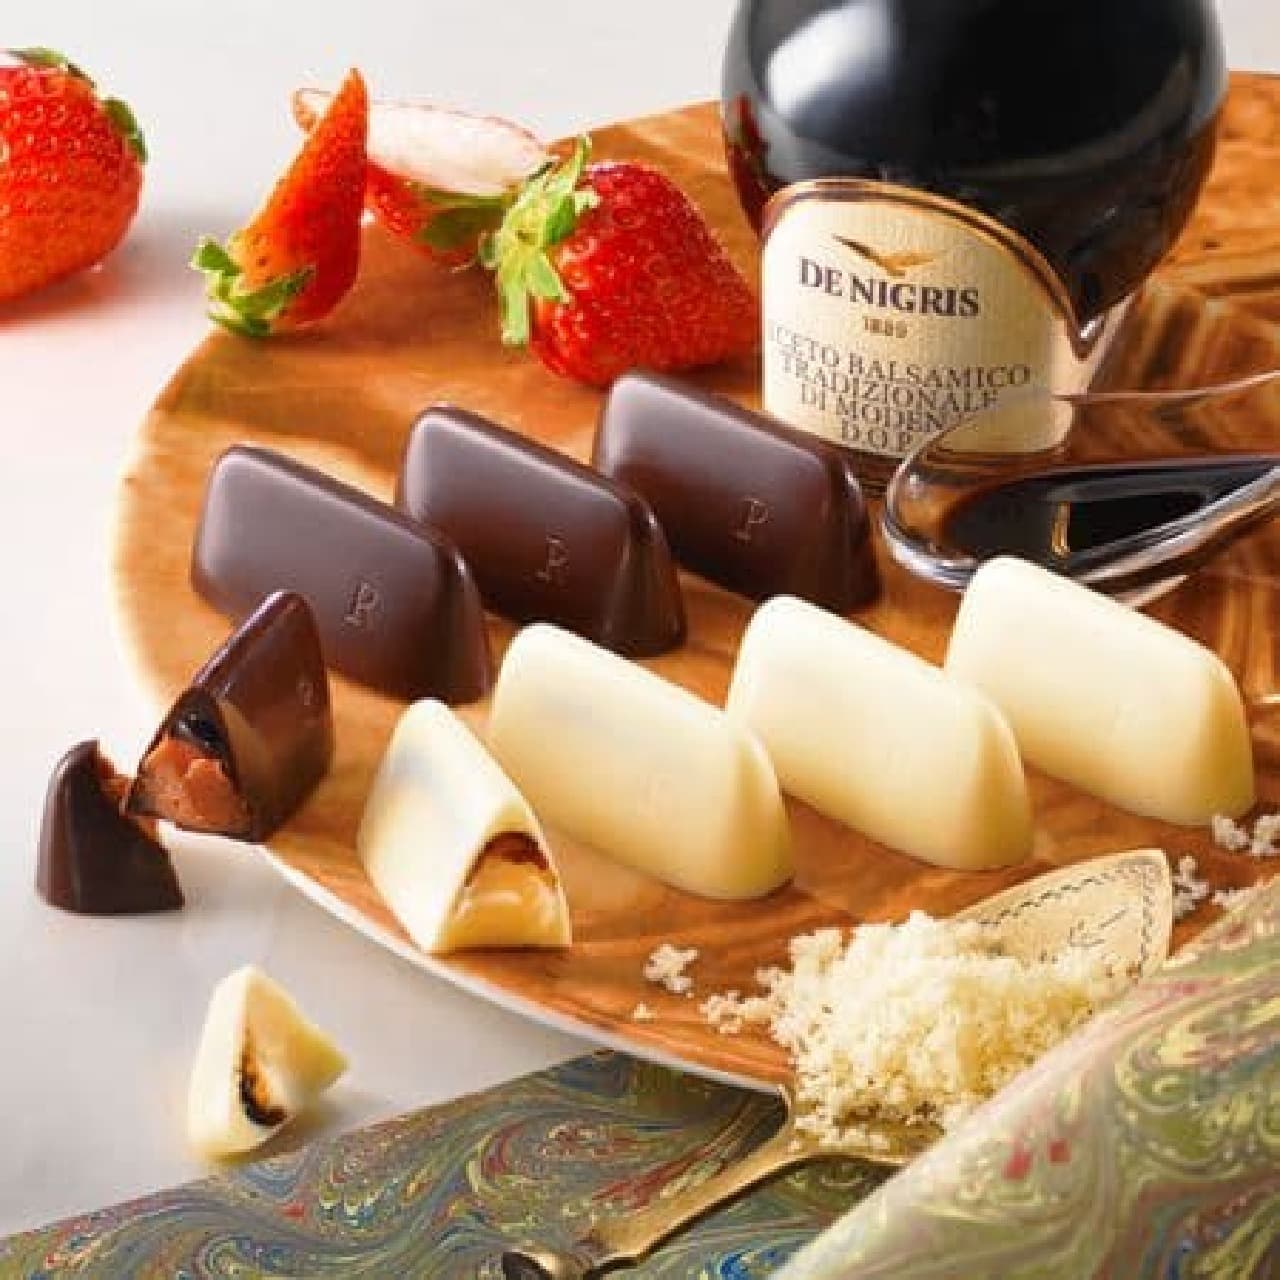 Lloyds "Praline Chocolat [Balsamic Duo]"